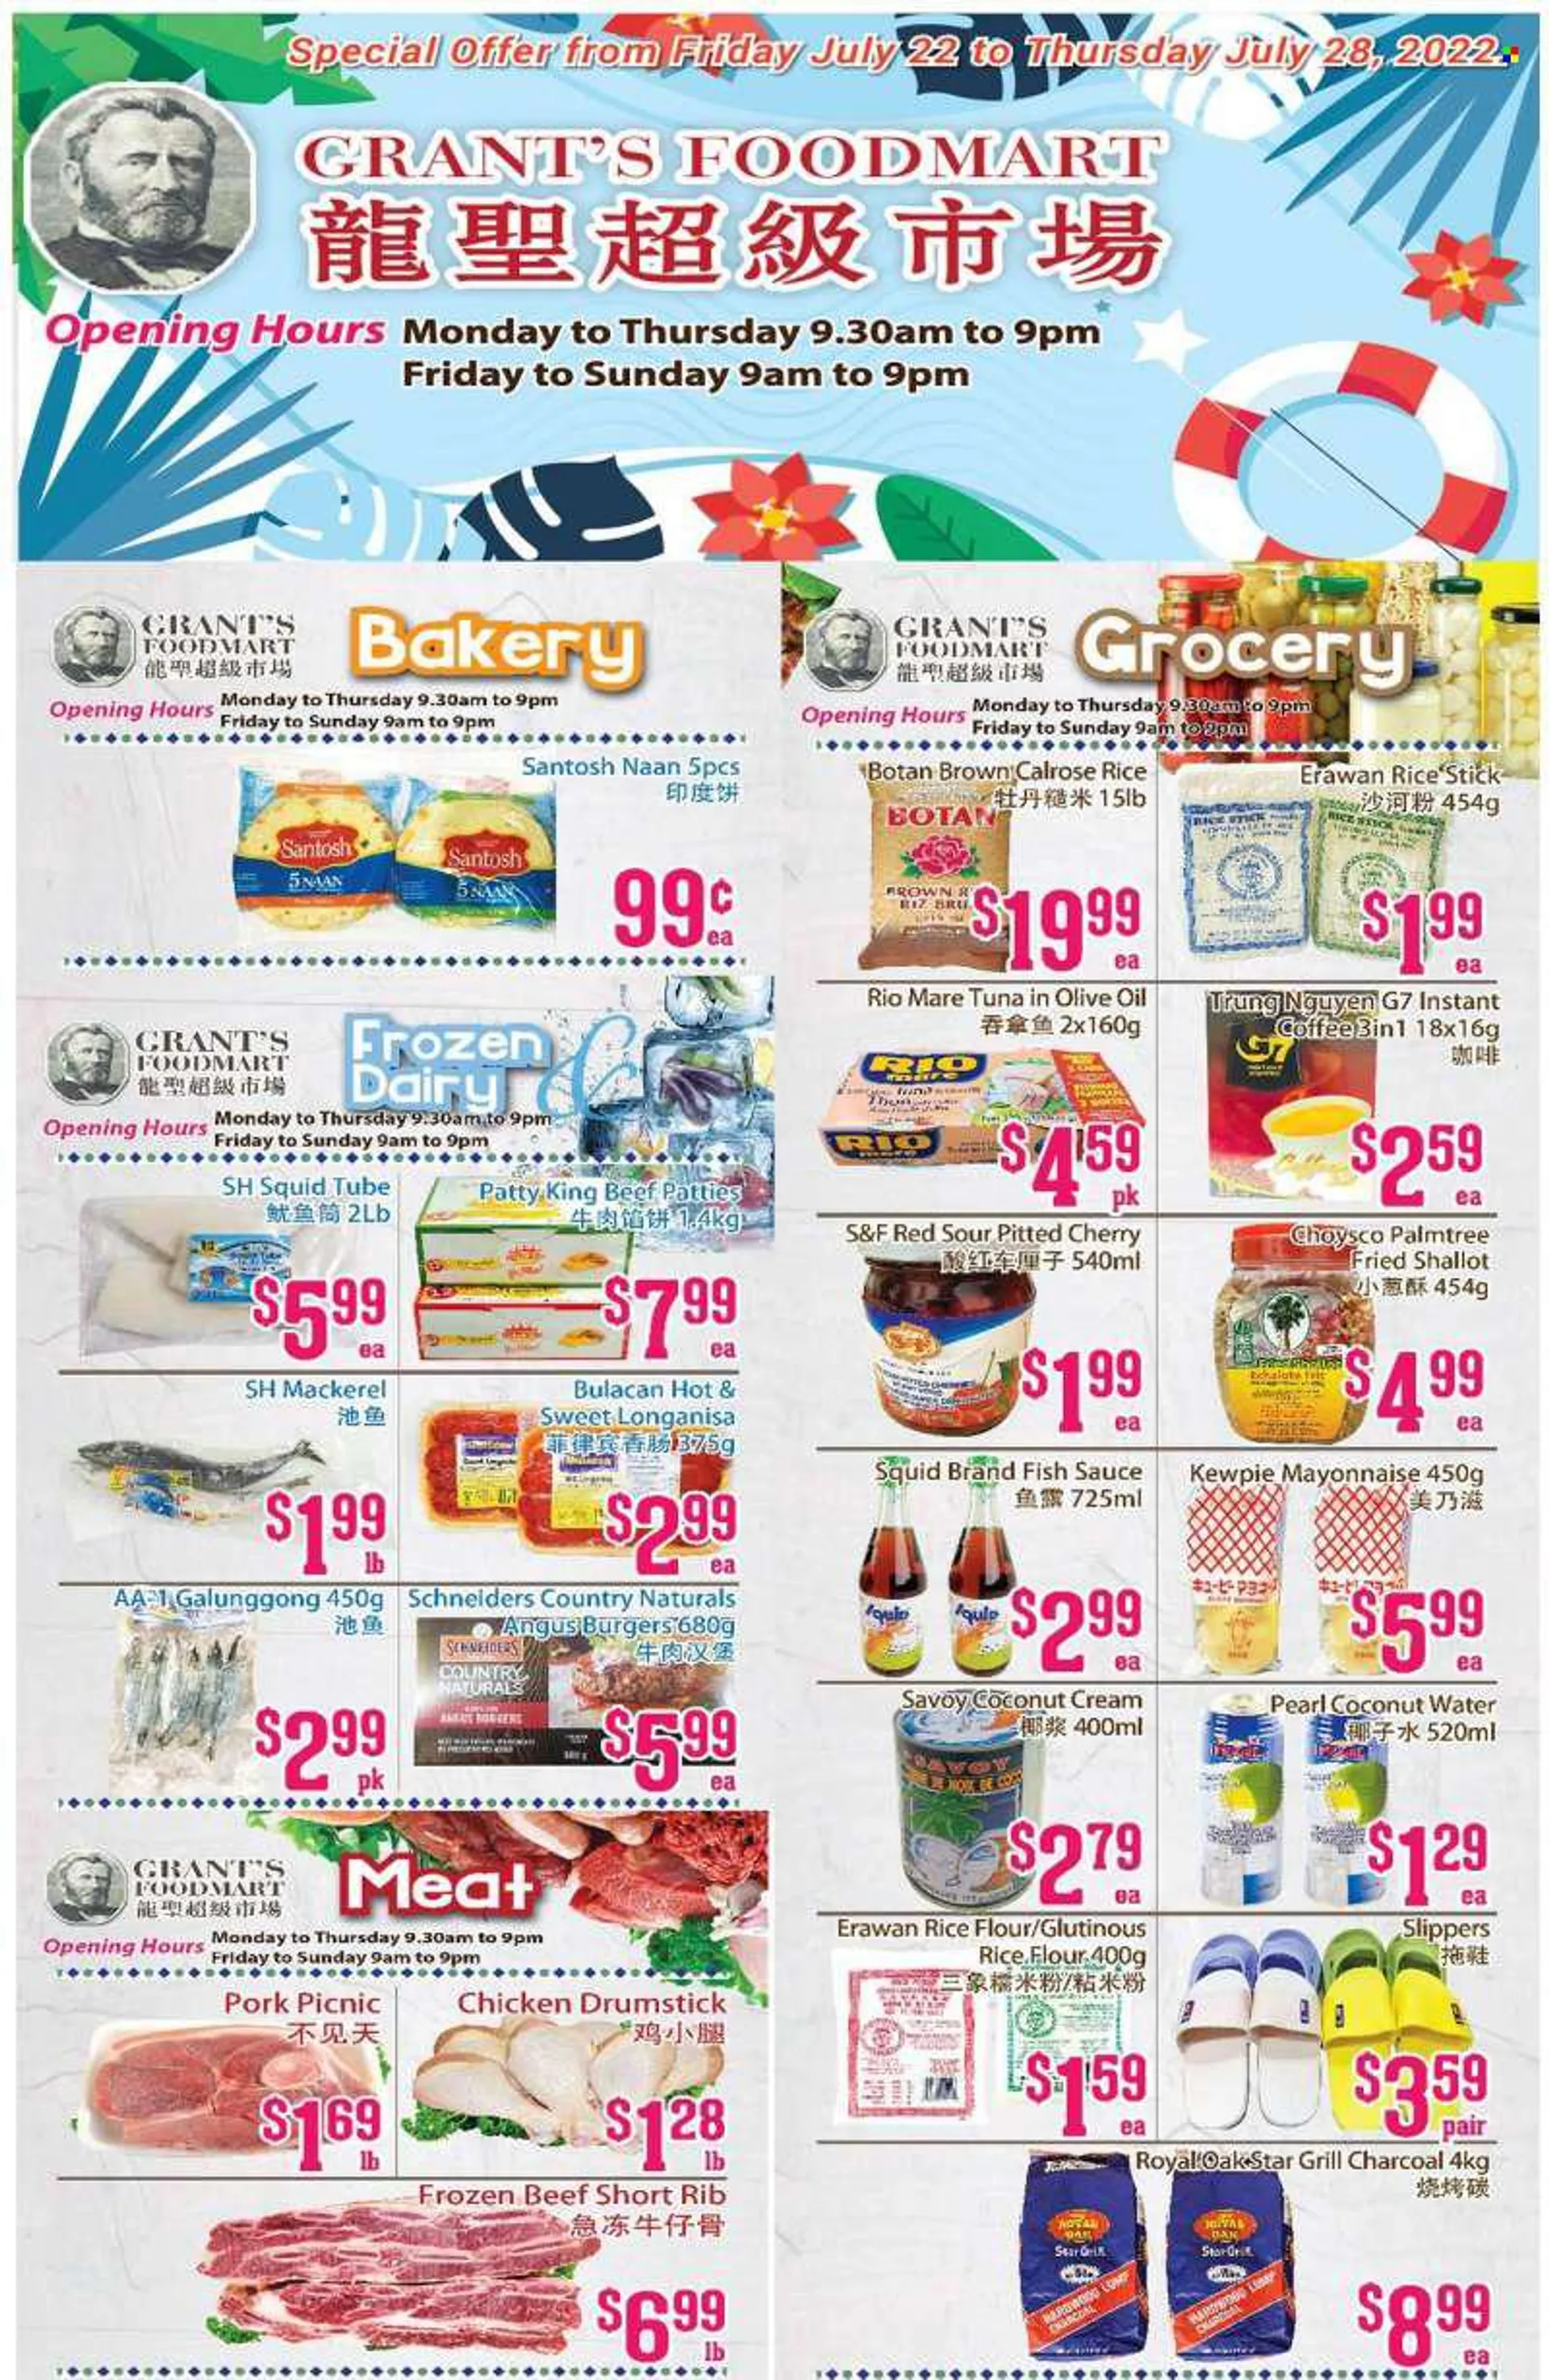 Grants Foodmart Flyer - July 22, 2022 - July 28, 2022 - Sales products - cherries, mackerel, squid, tuna, fish, hamburger, sauce, mayonnaise, flour, rice flour, fish sauce, instant coffee, Grants. Page 2.